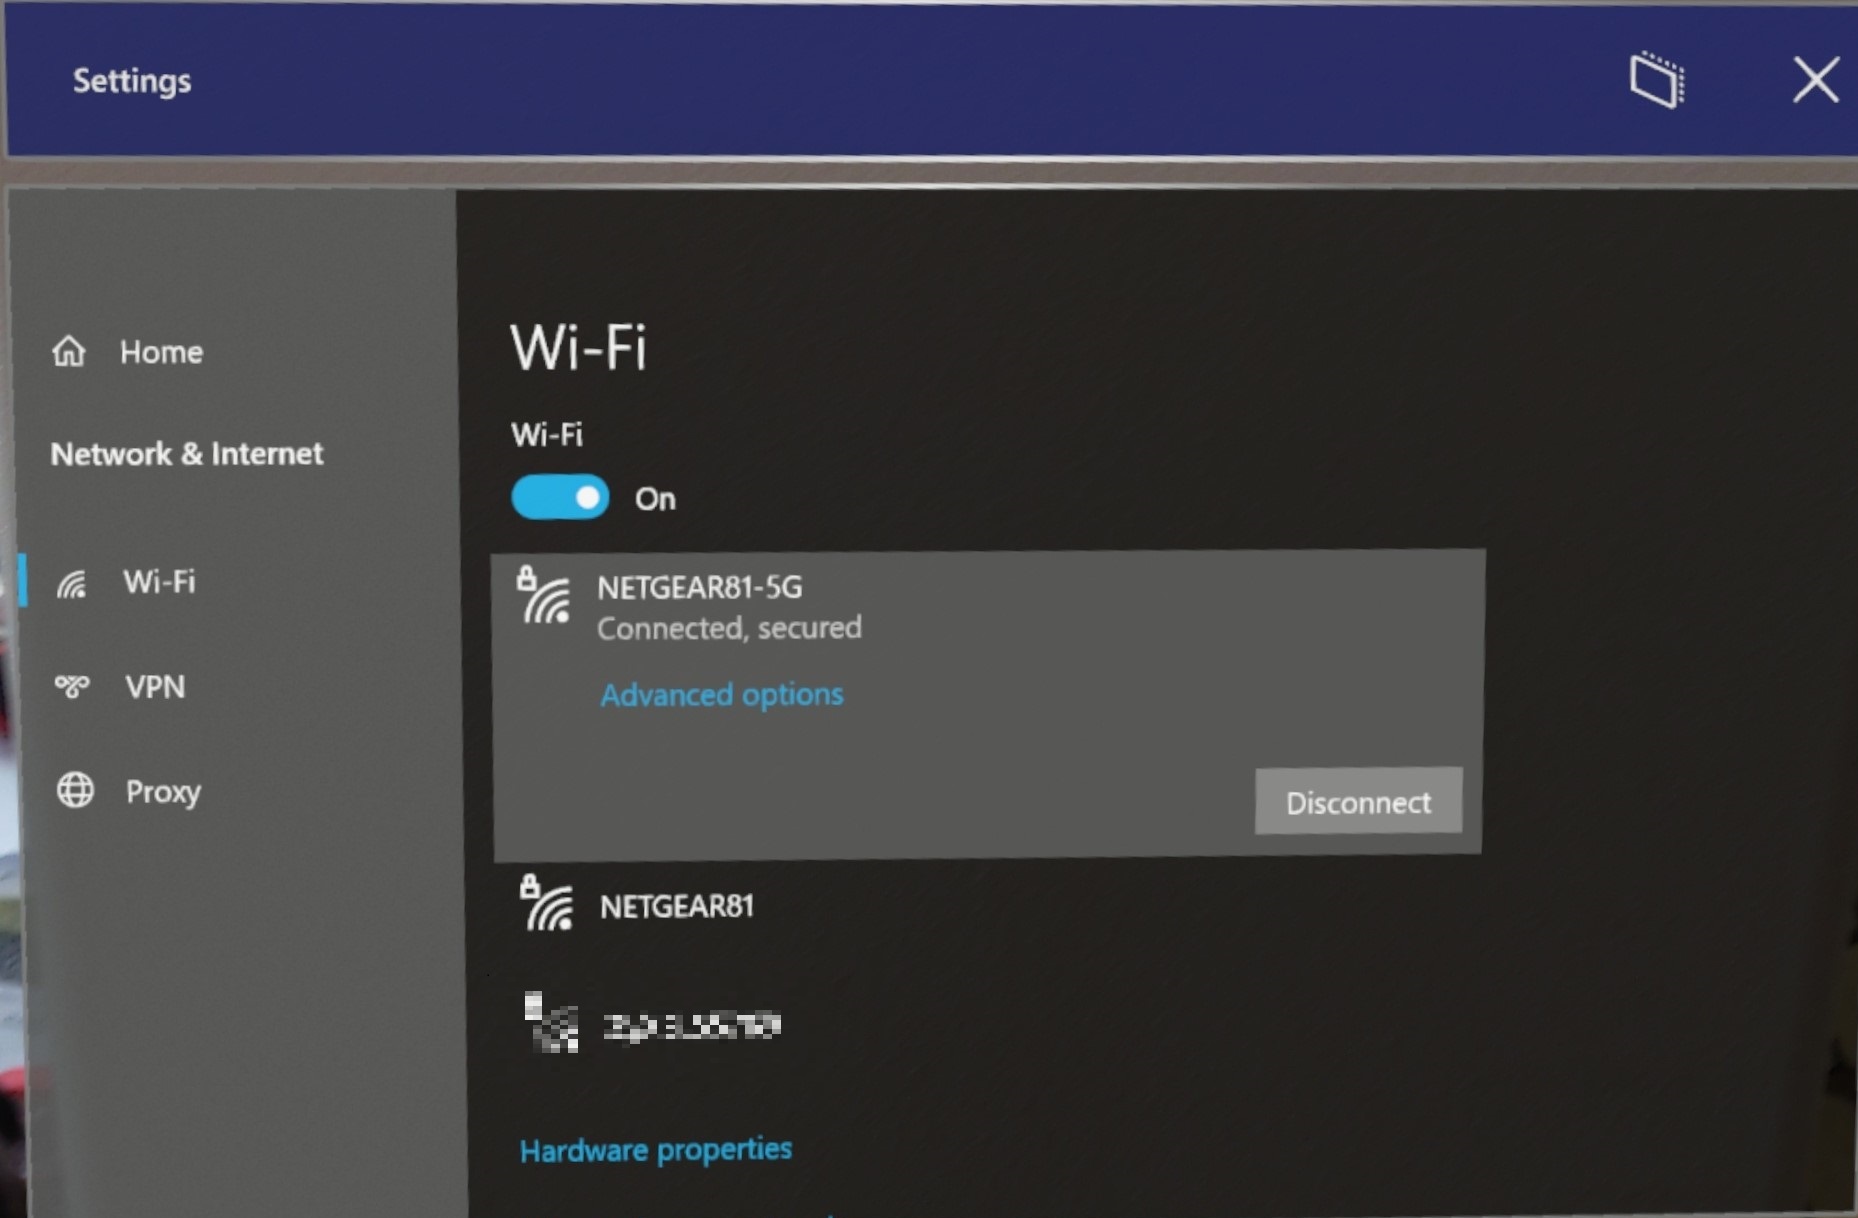 WiFi settings on a Windows 10 computer